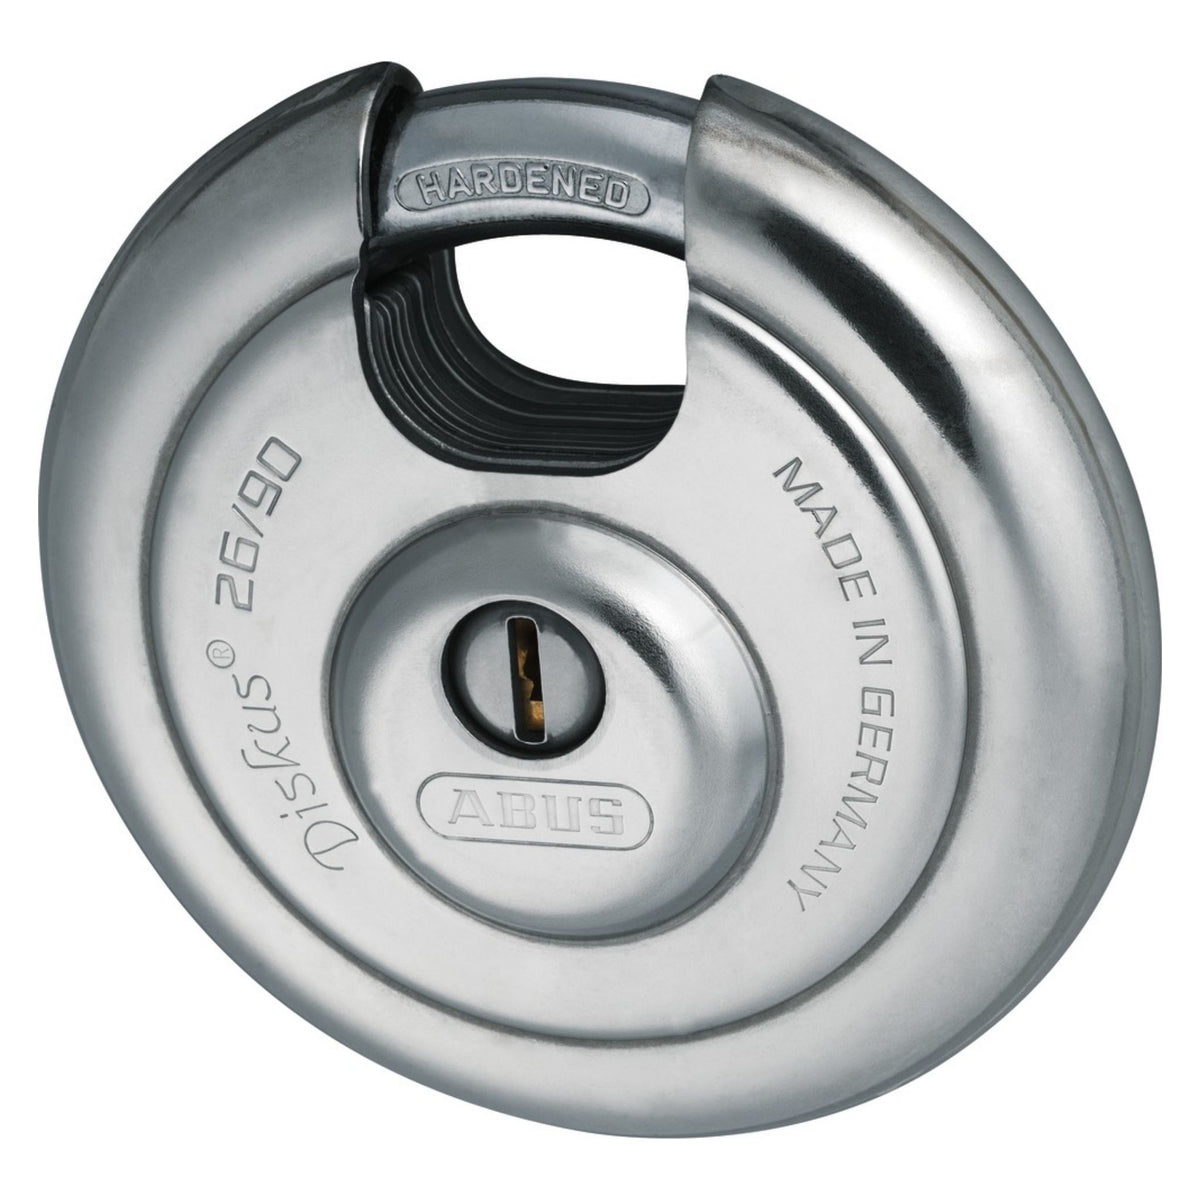 Abus 26/90 KA RR 00377 Diskus Lock Stainless Steel Disk Padlocks Keyed Alike to Match Existing Key# RR00377 - The Lock Source